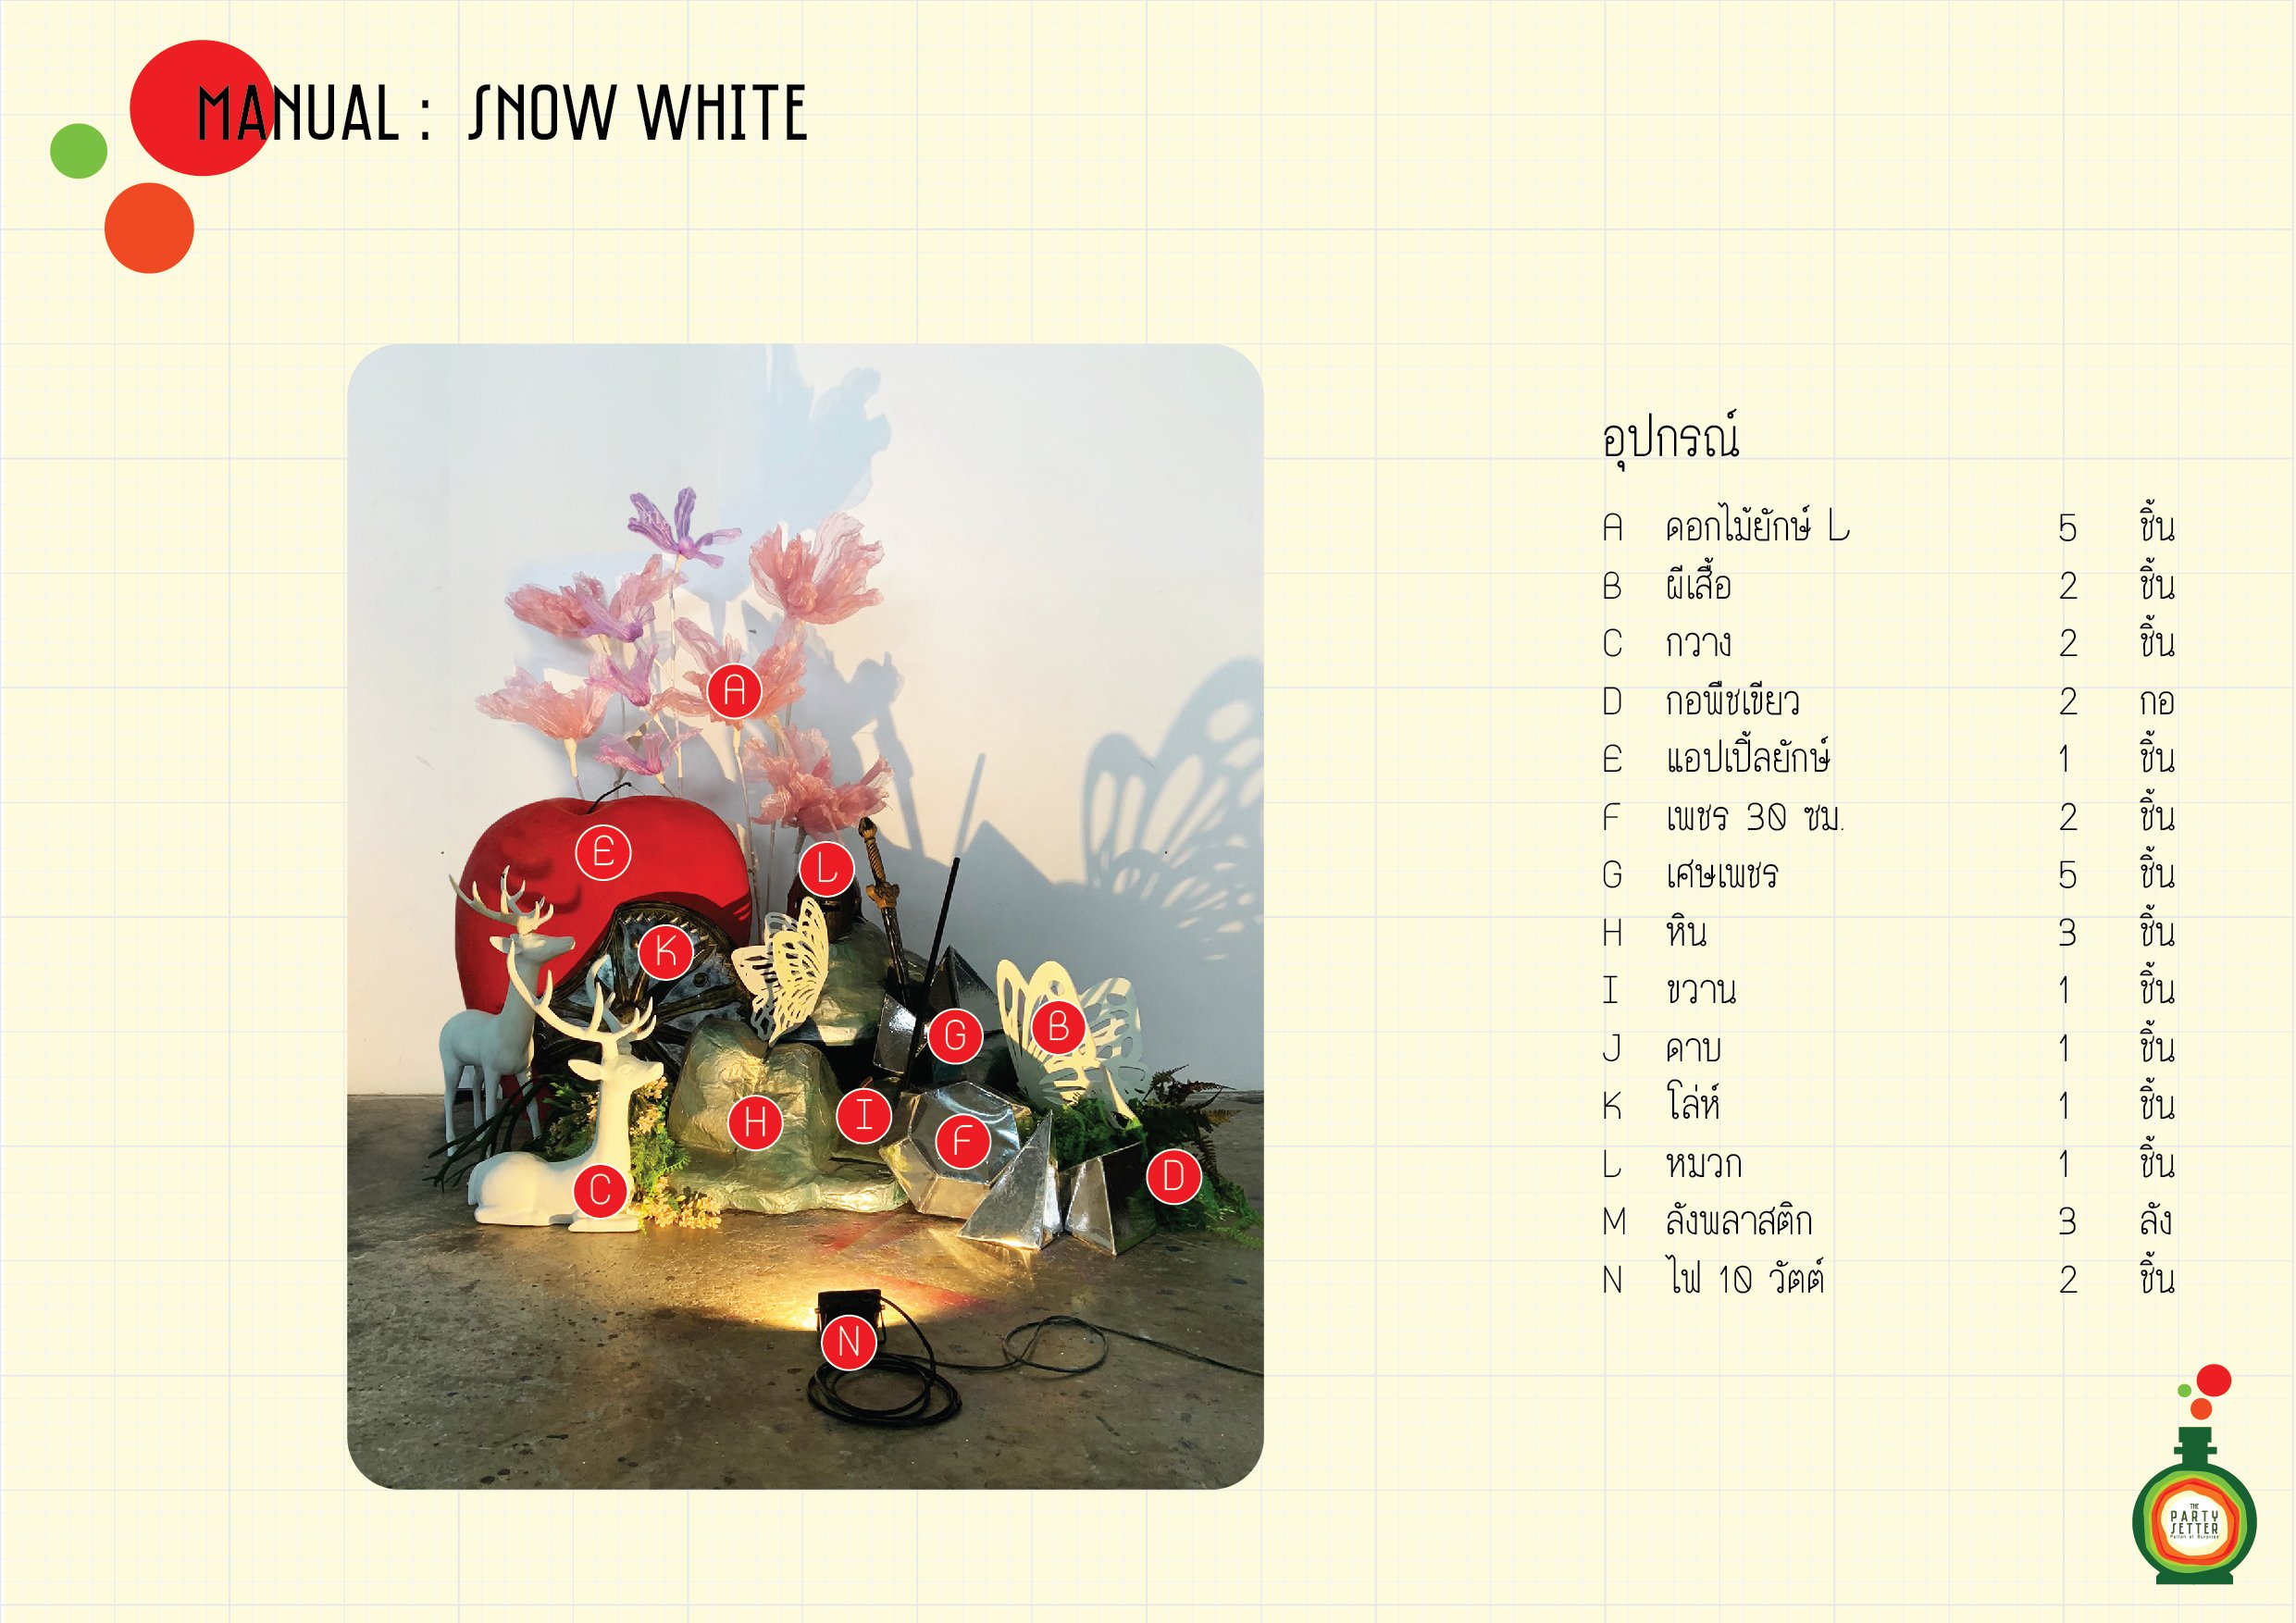 Manual_Snow White-00-01.jpg